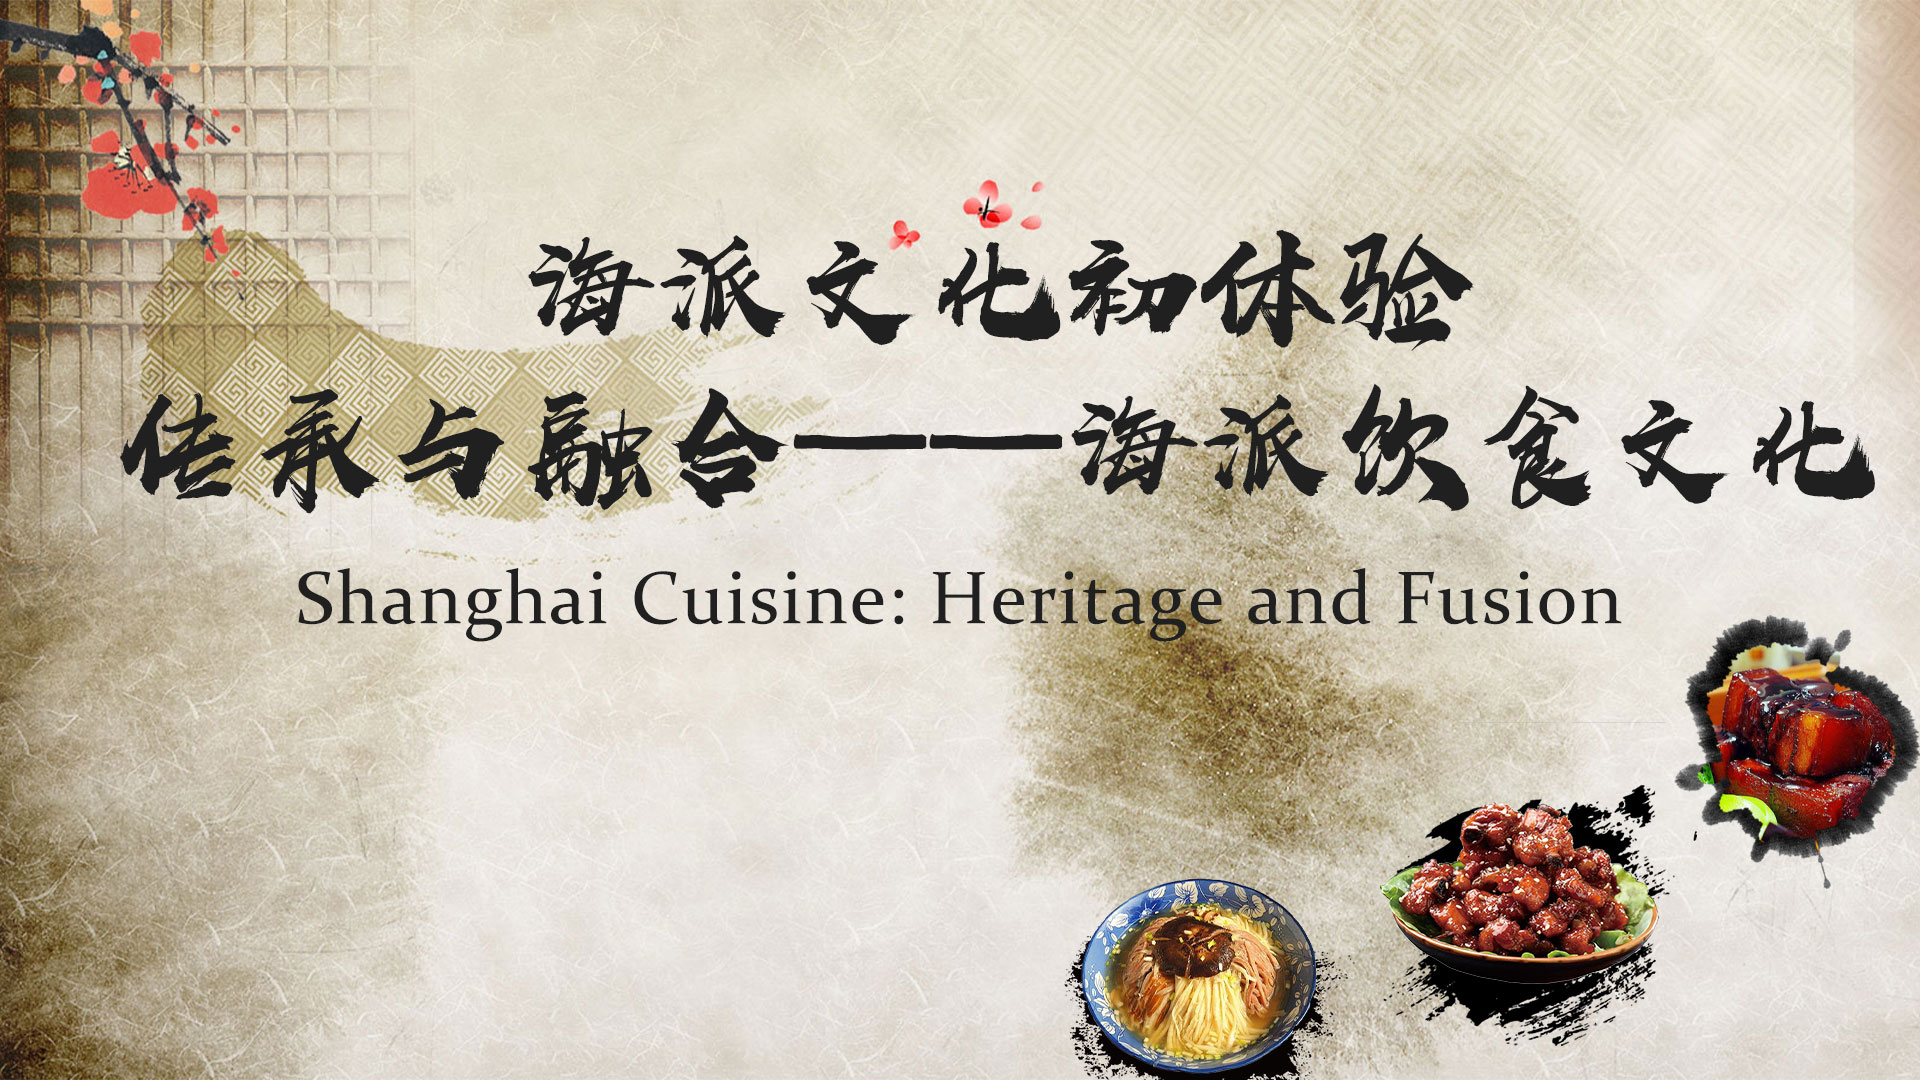 Shanghai Cuisine: Heritage and Fusion